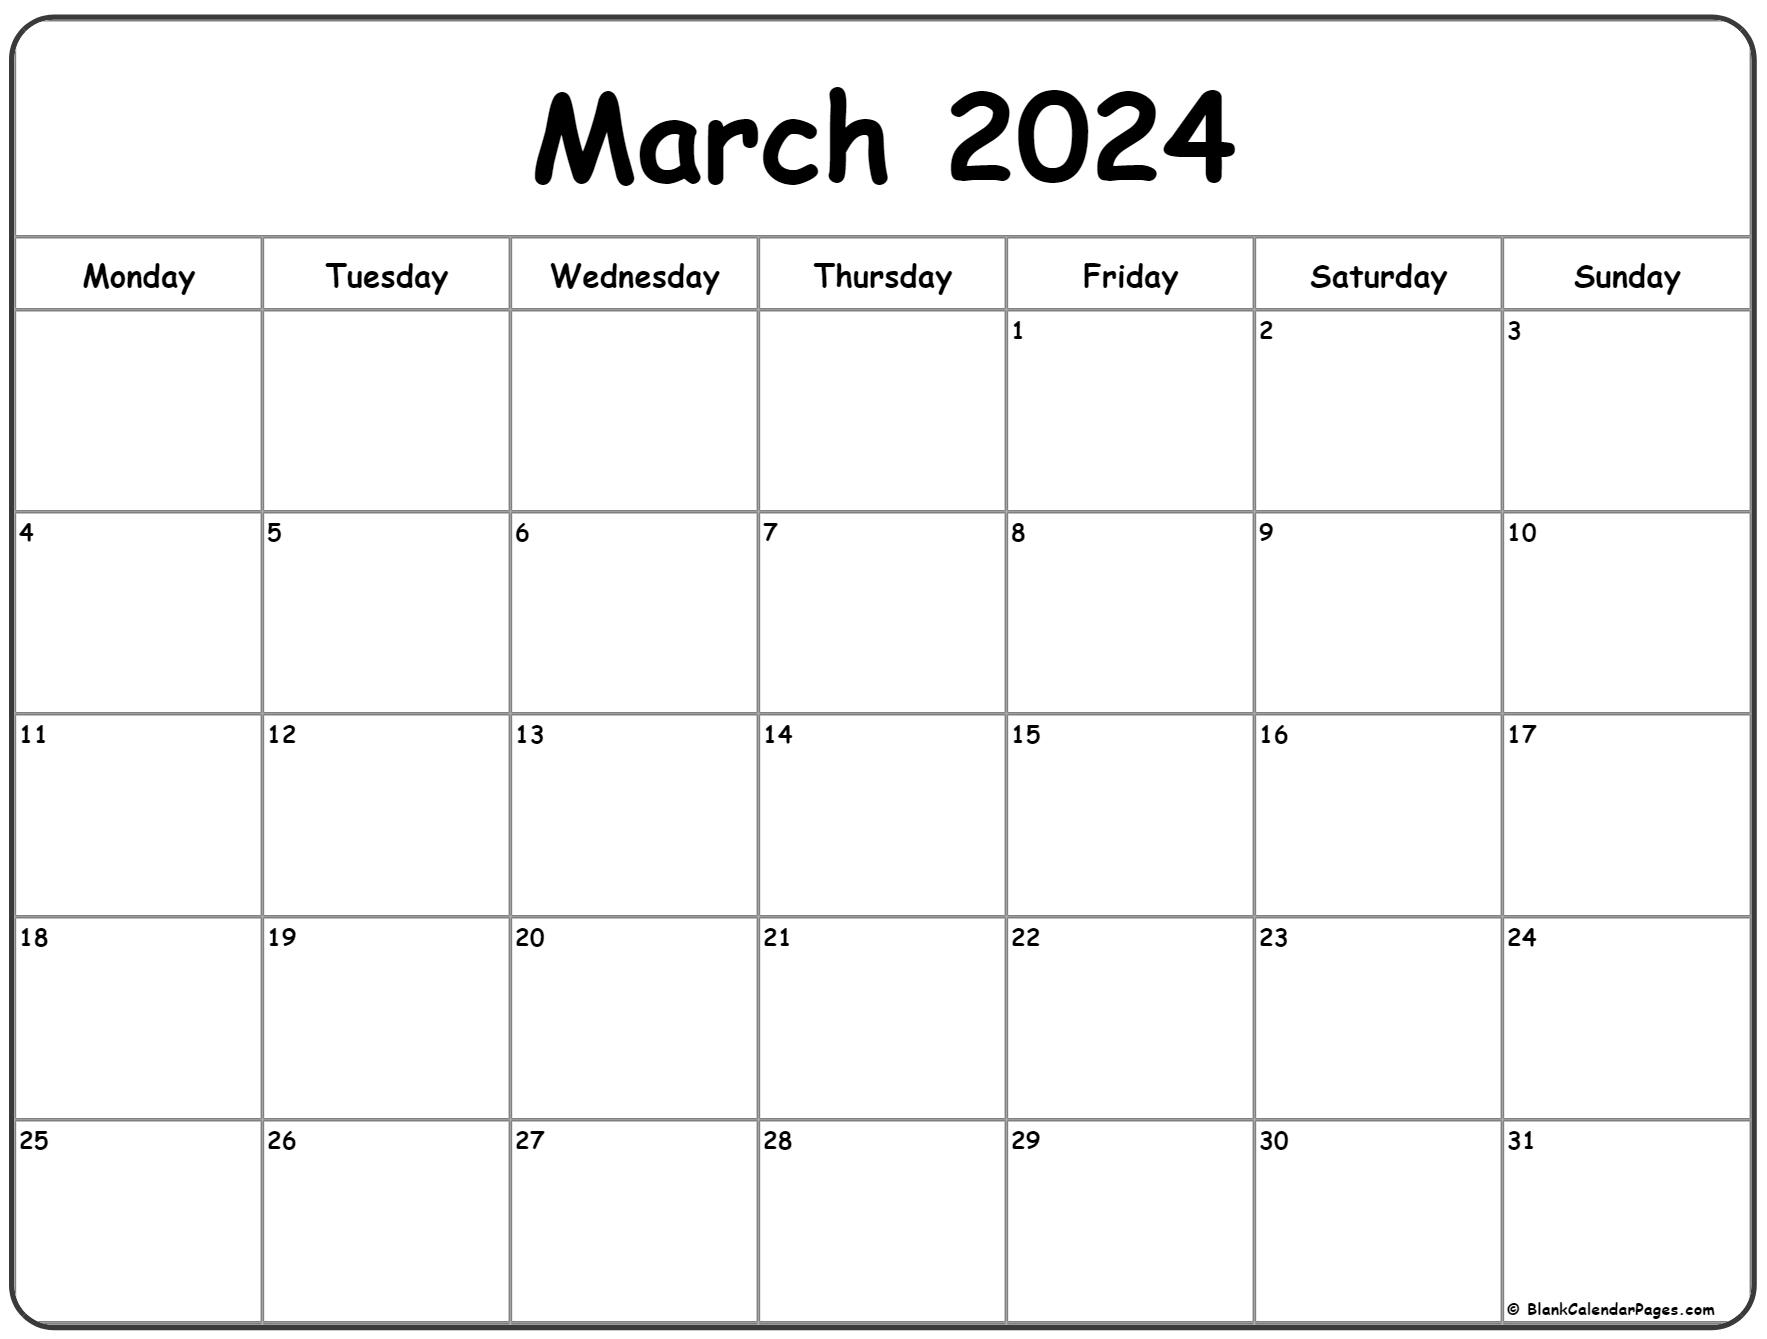 March 2024 Monday Calendar | Monday To Sunday for March 2024 Calendar Blank Printable